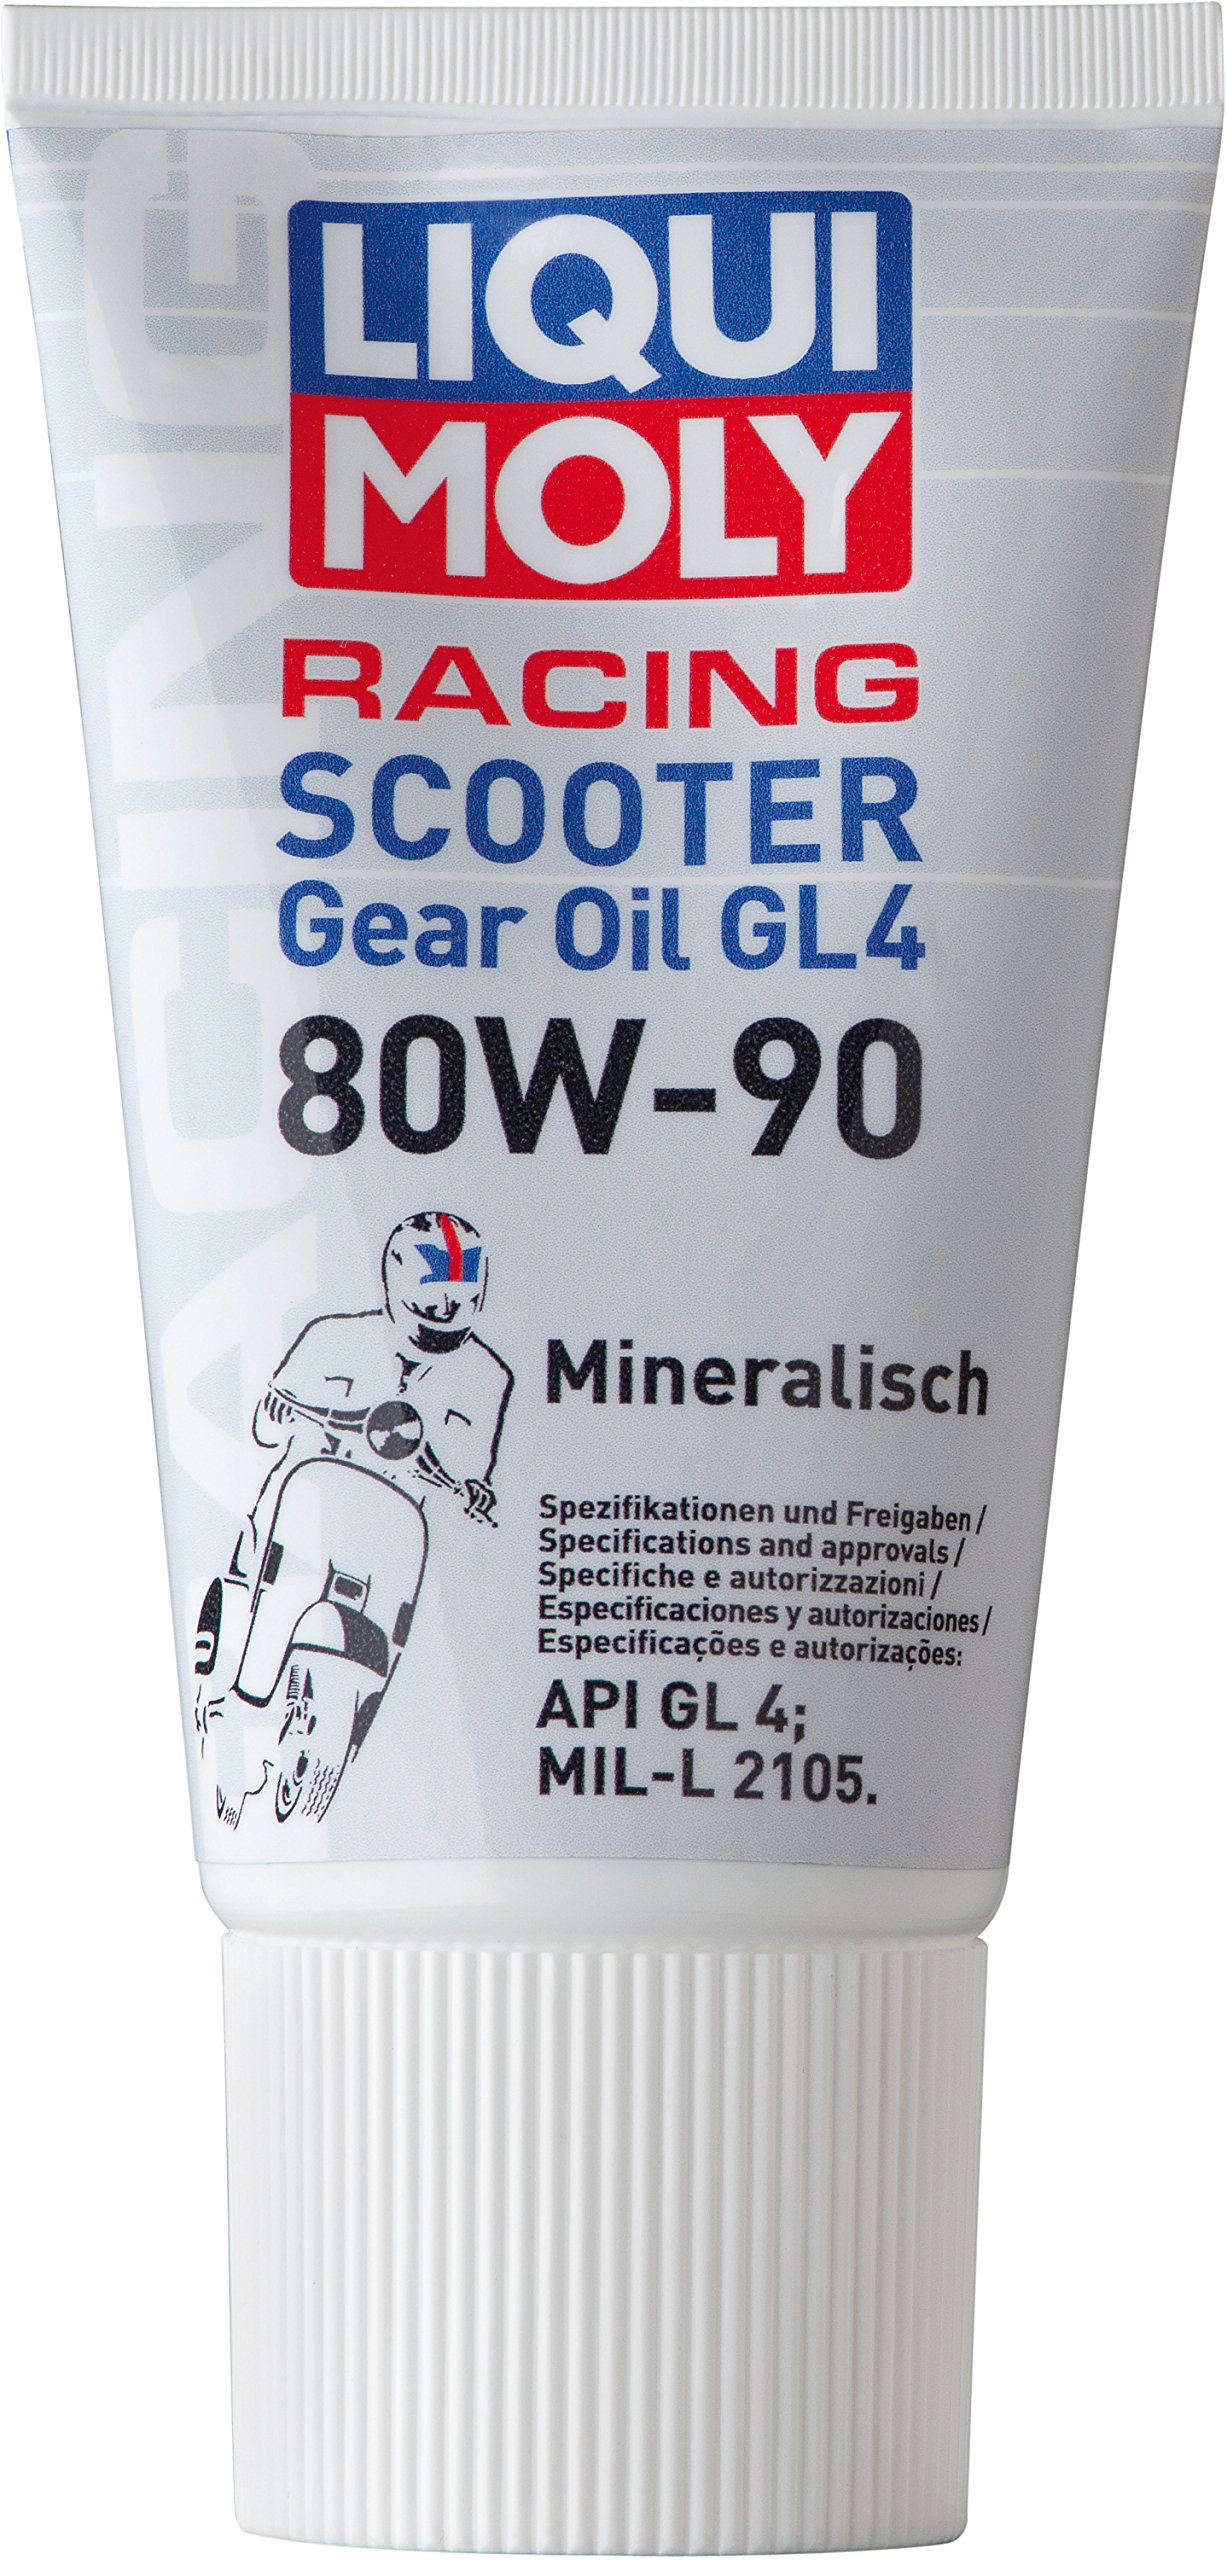 LIQUI MOLY Motorbike Gear Oil (GL4) 80W-90 Scooter | 150 ml | Motorrad Getriebeöl | Art.-Nr.: 1680 von Liqui Moly